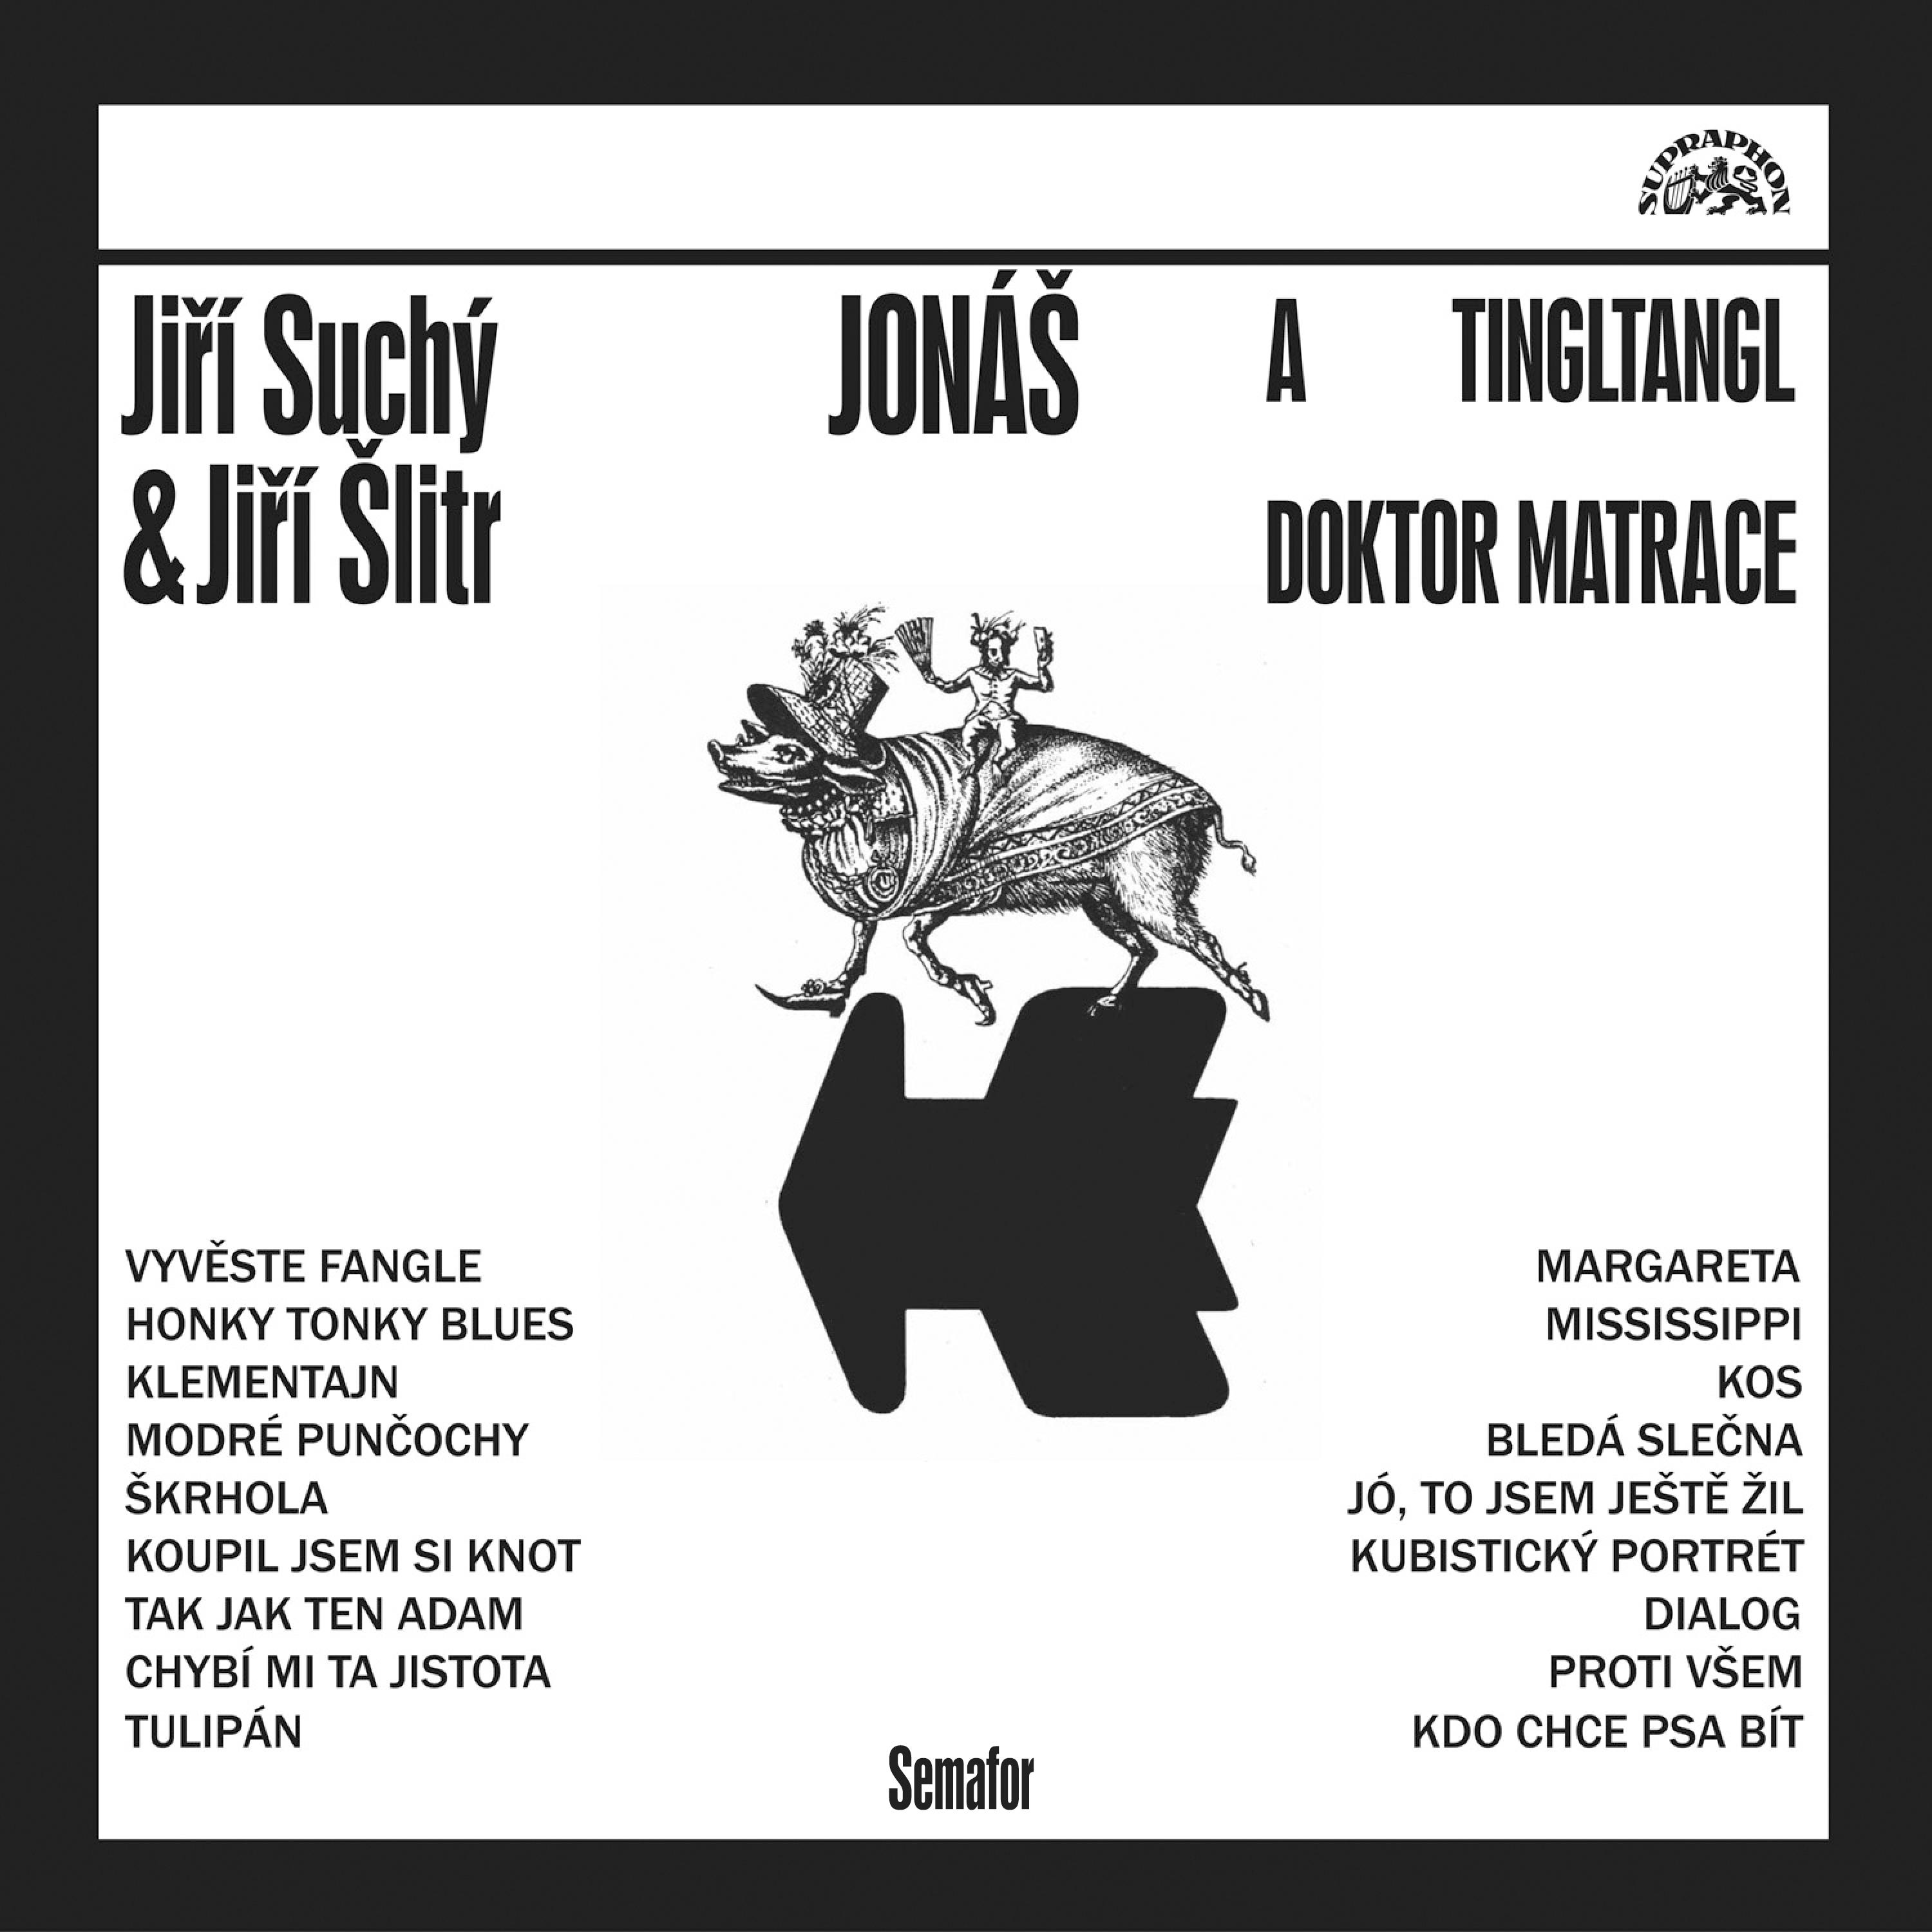 CD Shop - SUCHY JIRI, SLITR JIRI JONAS A TINGLTANGL / JONAS A DOKTOR MATRACE